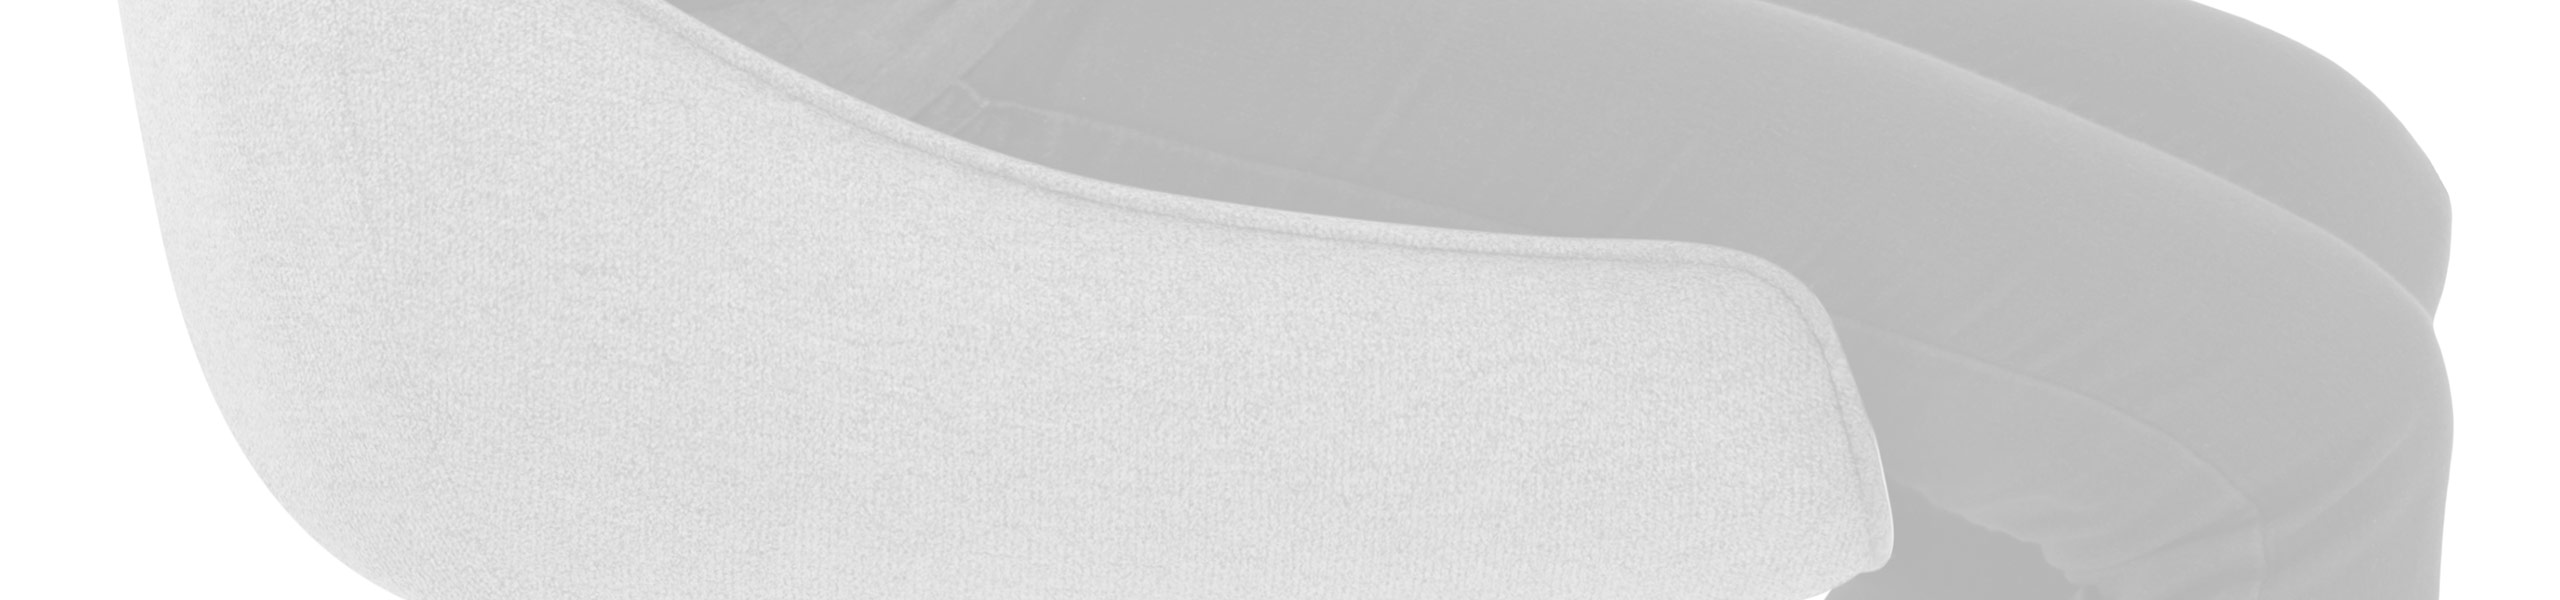 Creed Bar Stool Light Grey Fabric - Atlantic Shopping